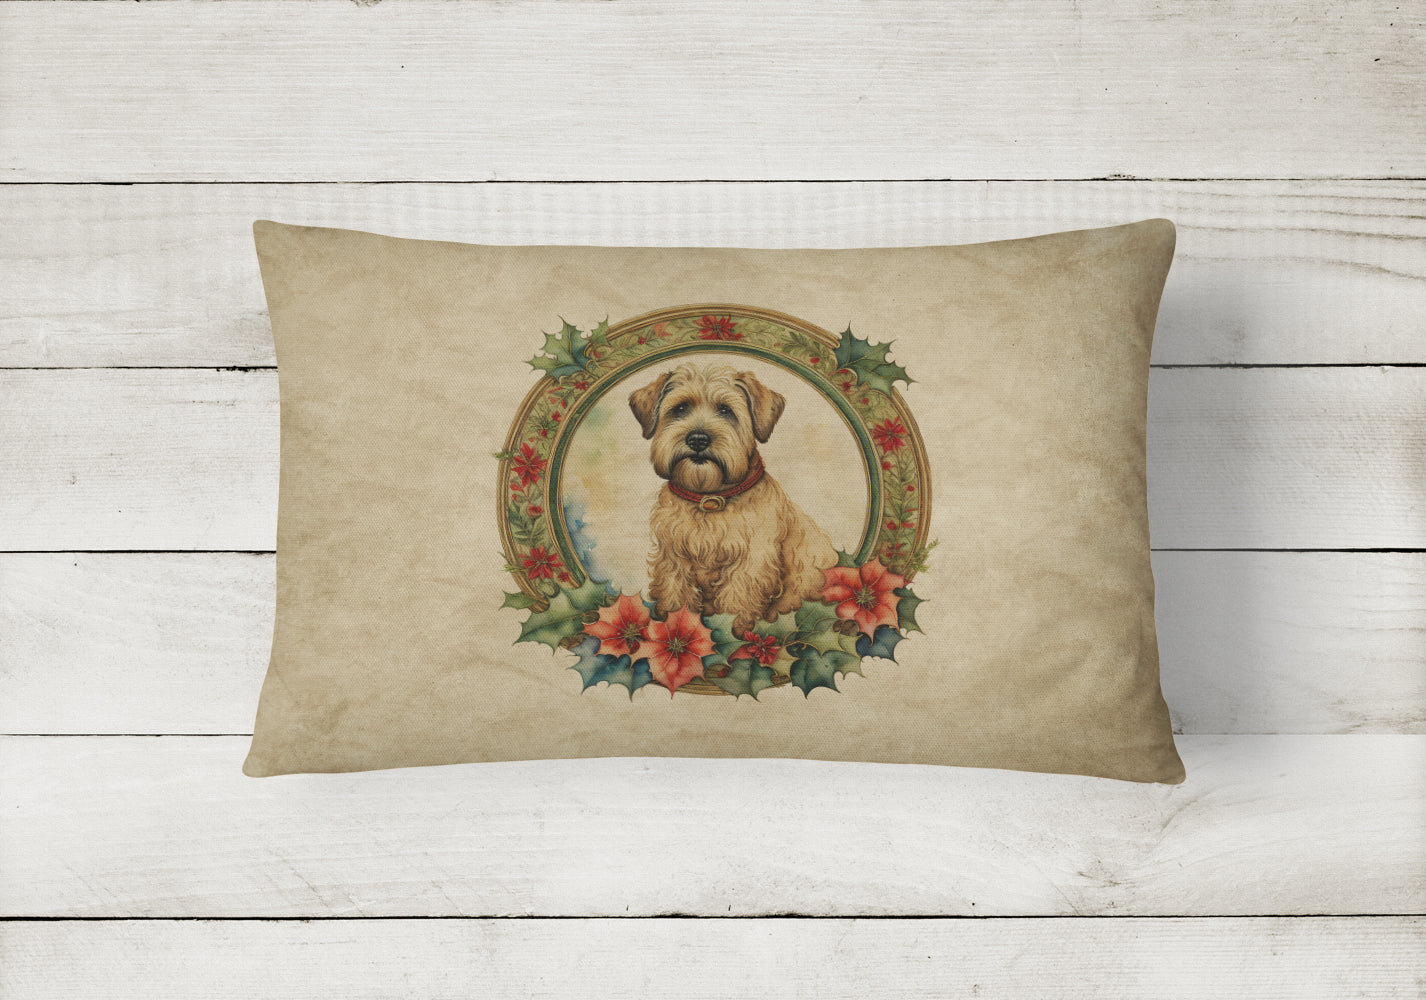 Buy this Wheaten Terrier Christmas Flowers Throw Pillow